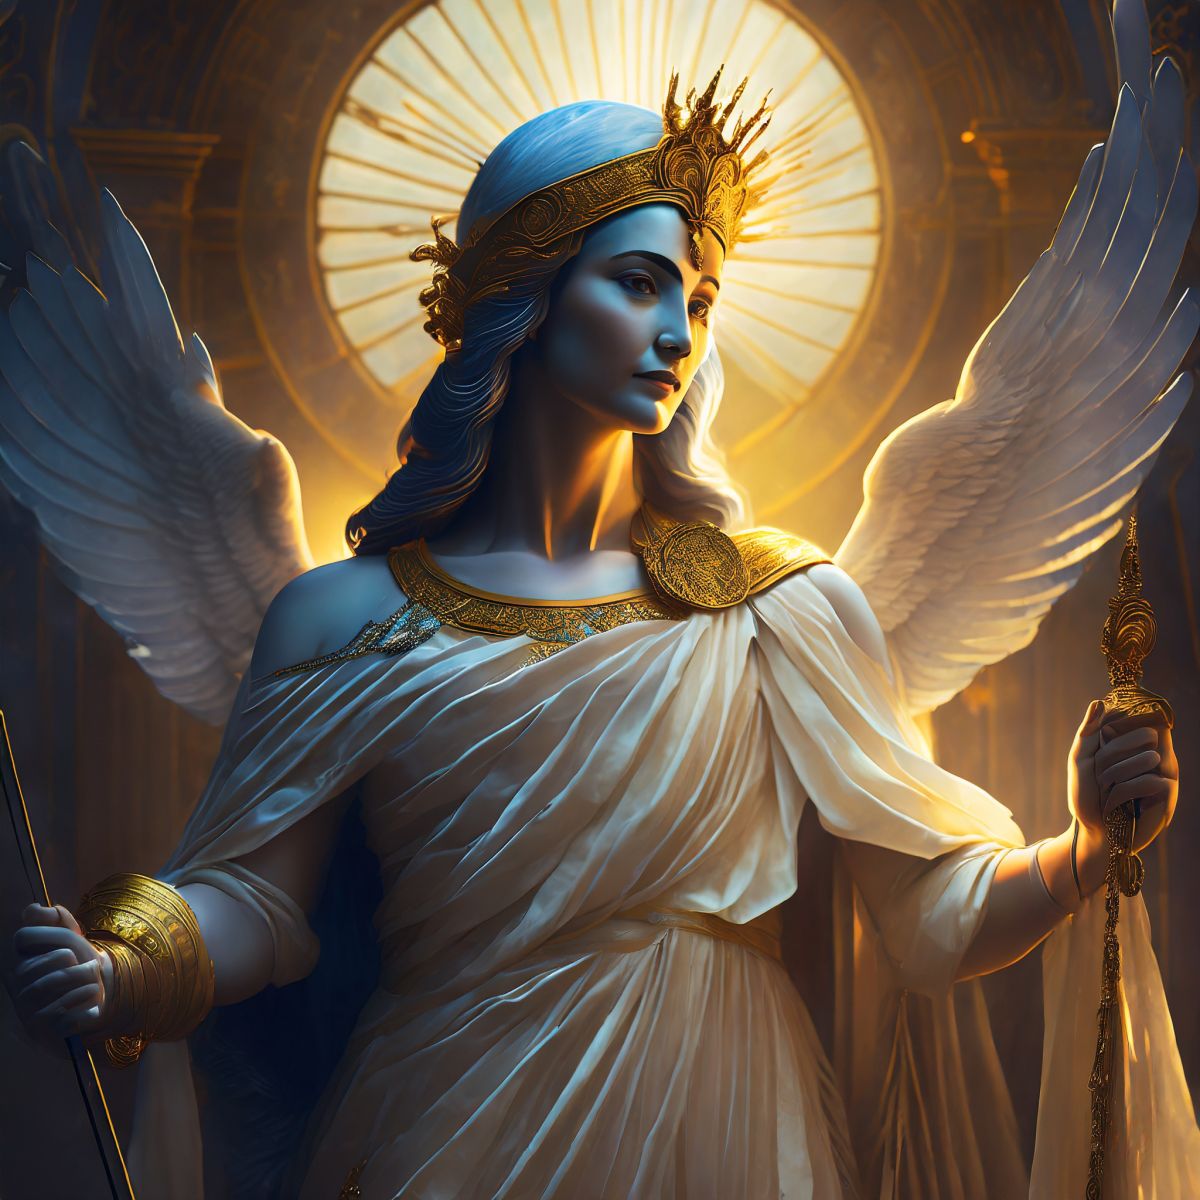 A portrait of the Goddess Athena.